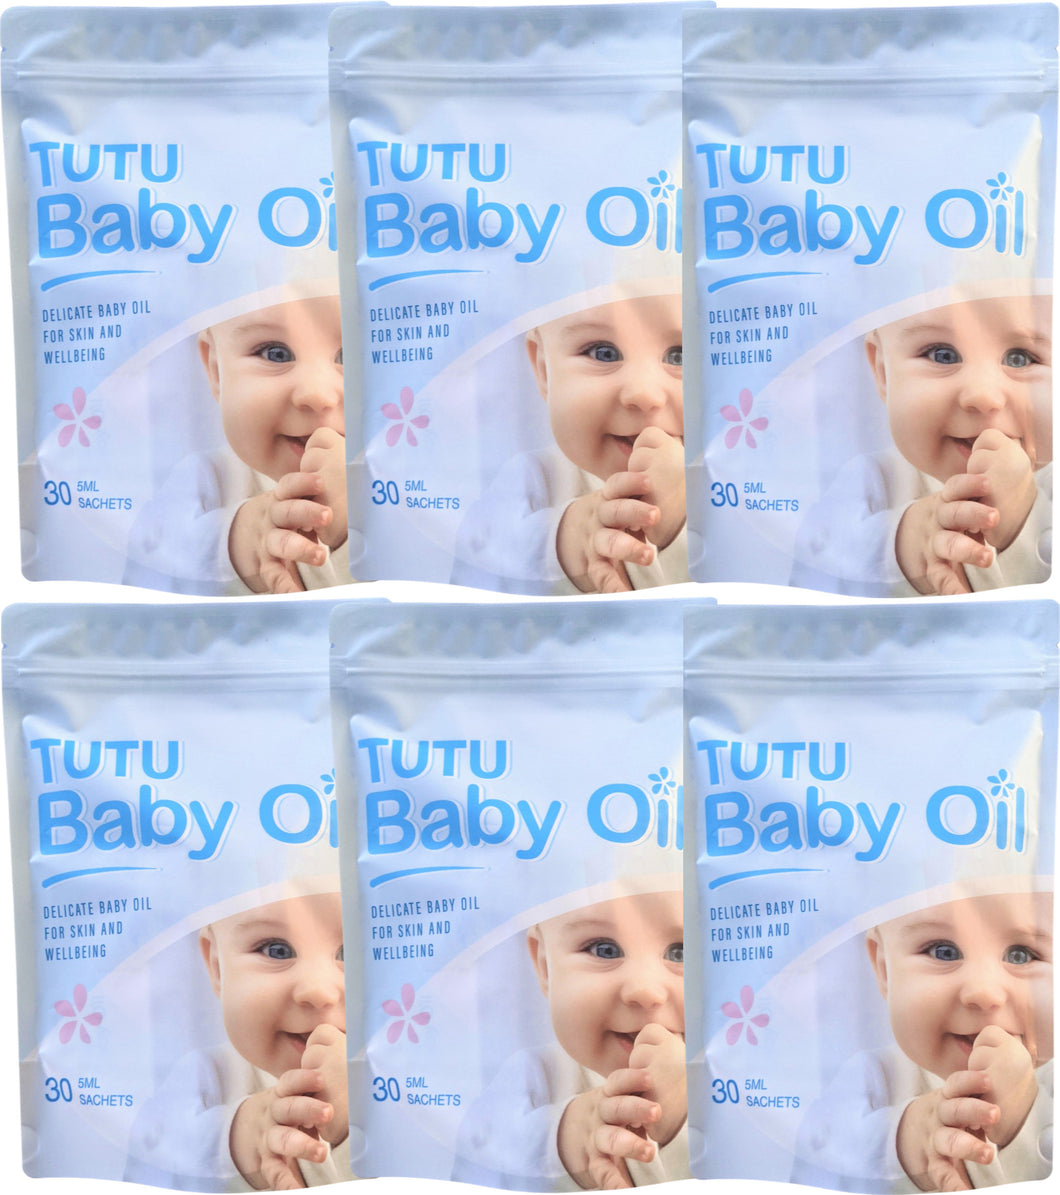 TUTU BABY OIL - SPECIAL BULK 6 Packs as prescribed in West